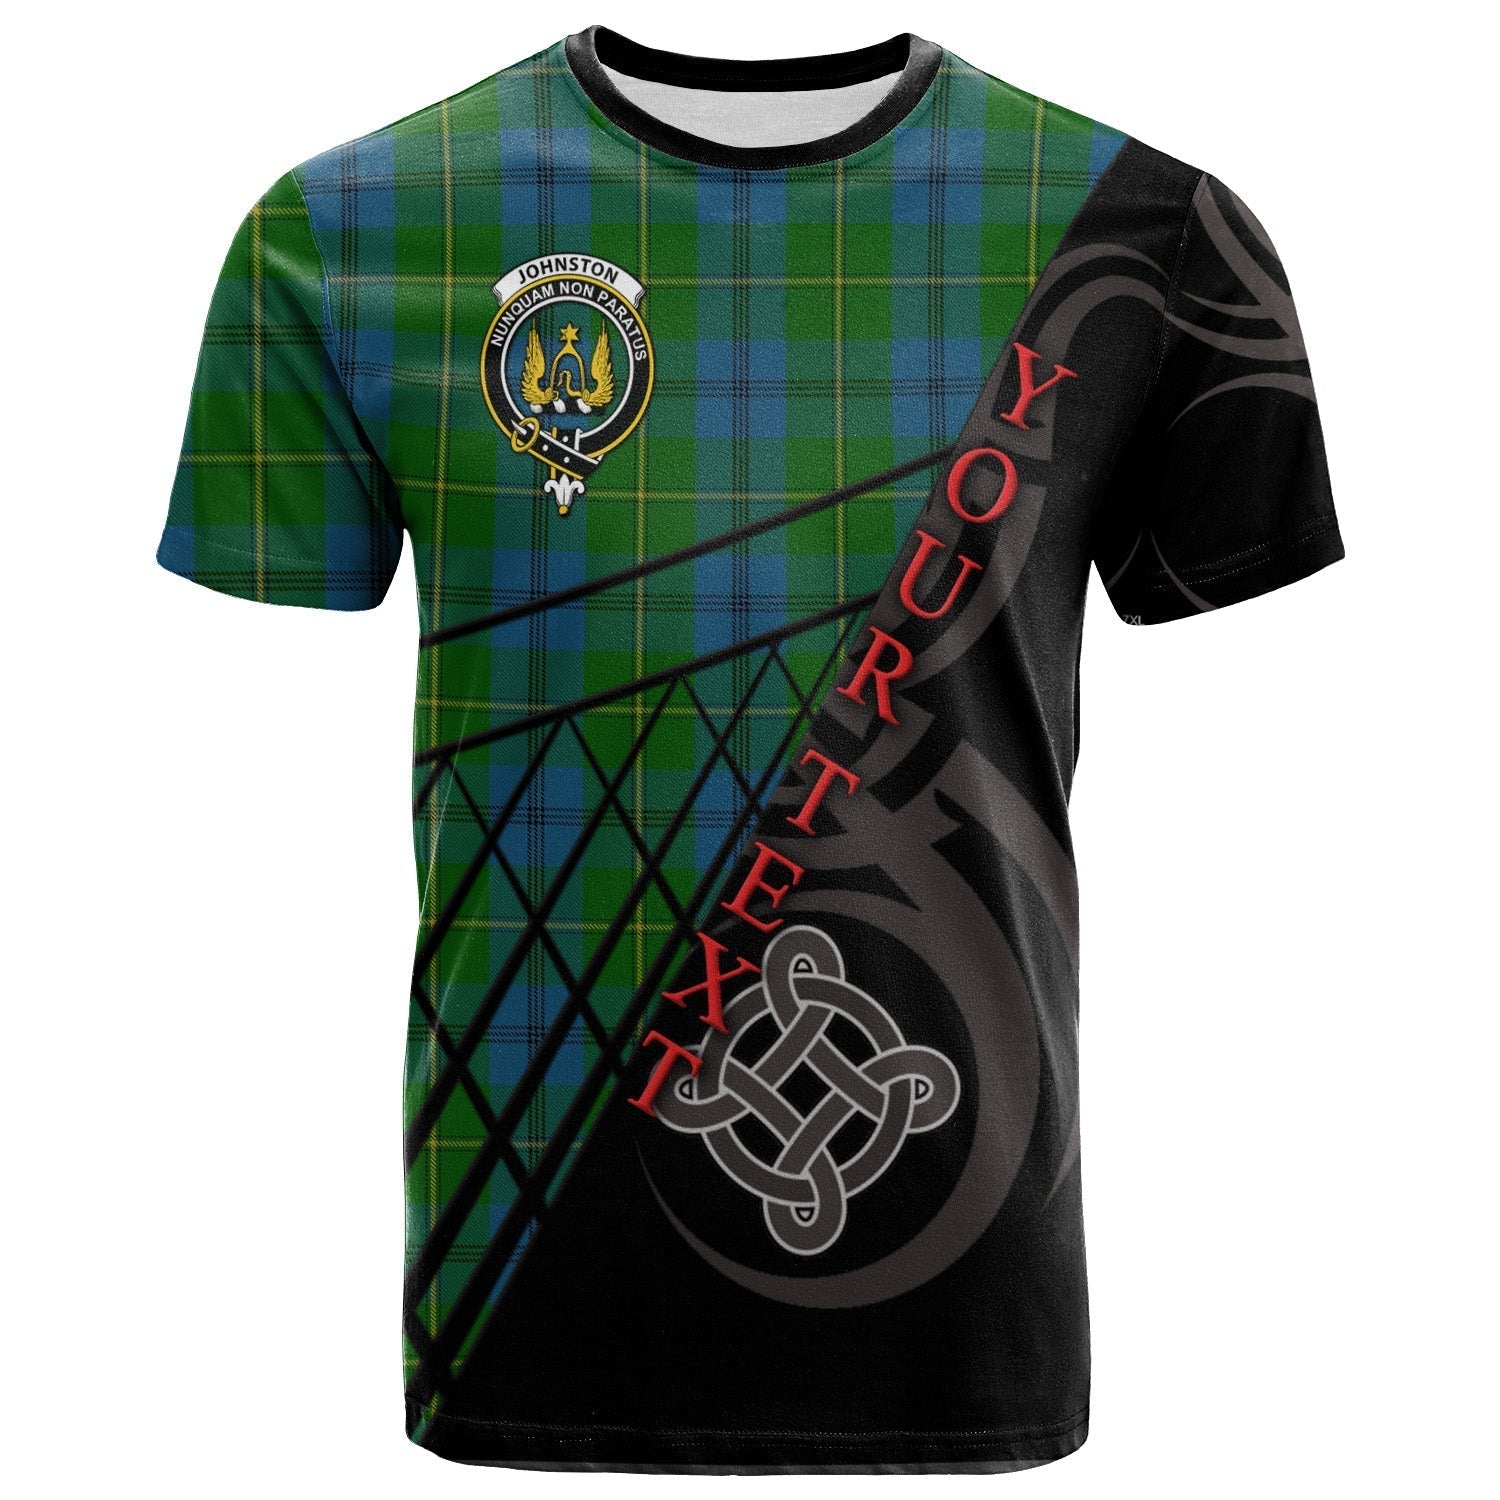 scottish-johnston-johnstone-01-clan-crest-tartan-pattern-celtic-t-shirt